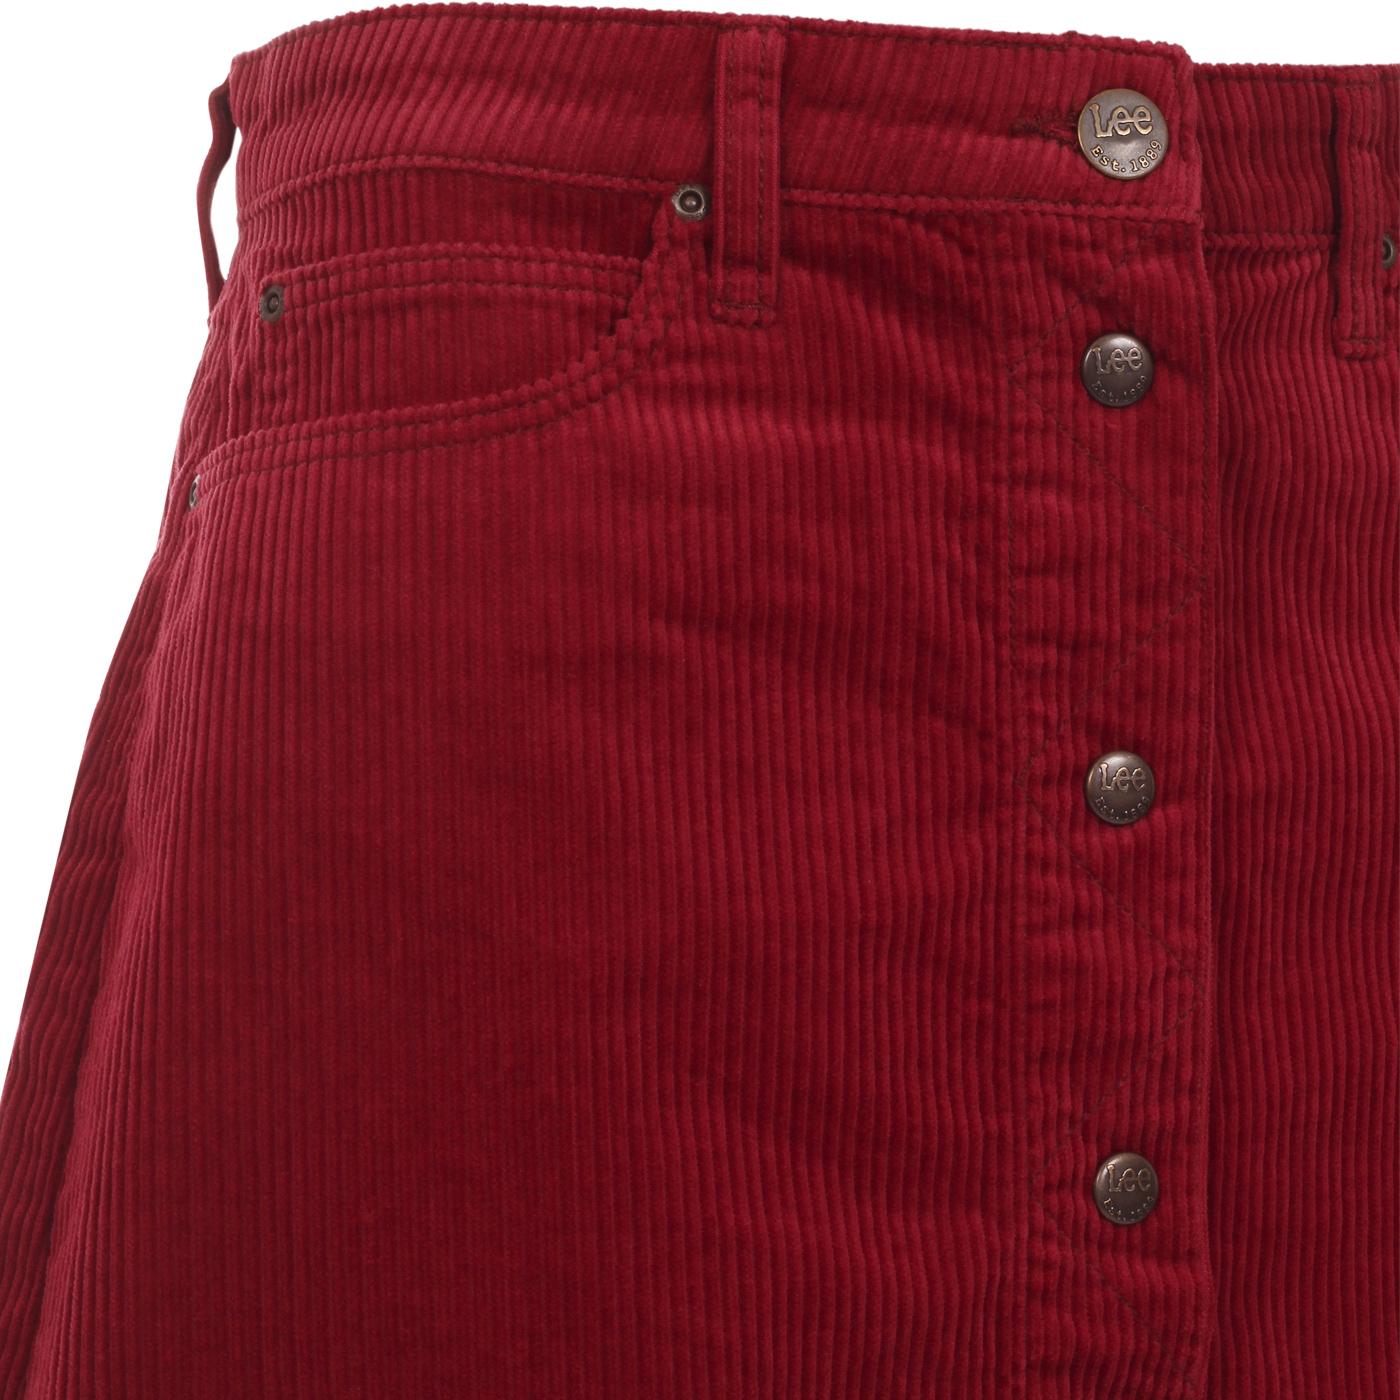 LEE JEANS Womens Retro Cord A-Line Mini Skirt Biking Red